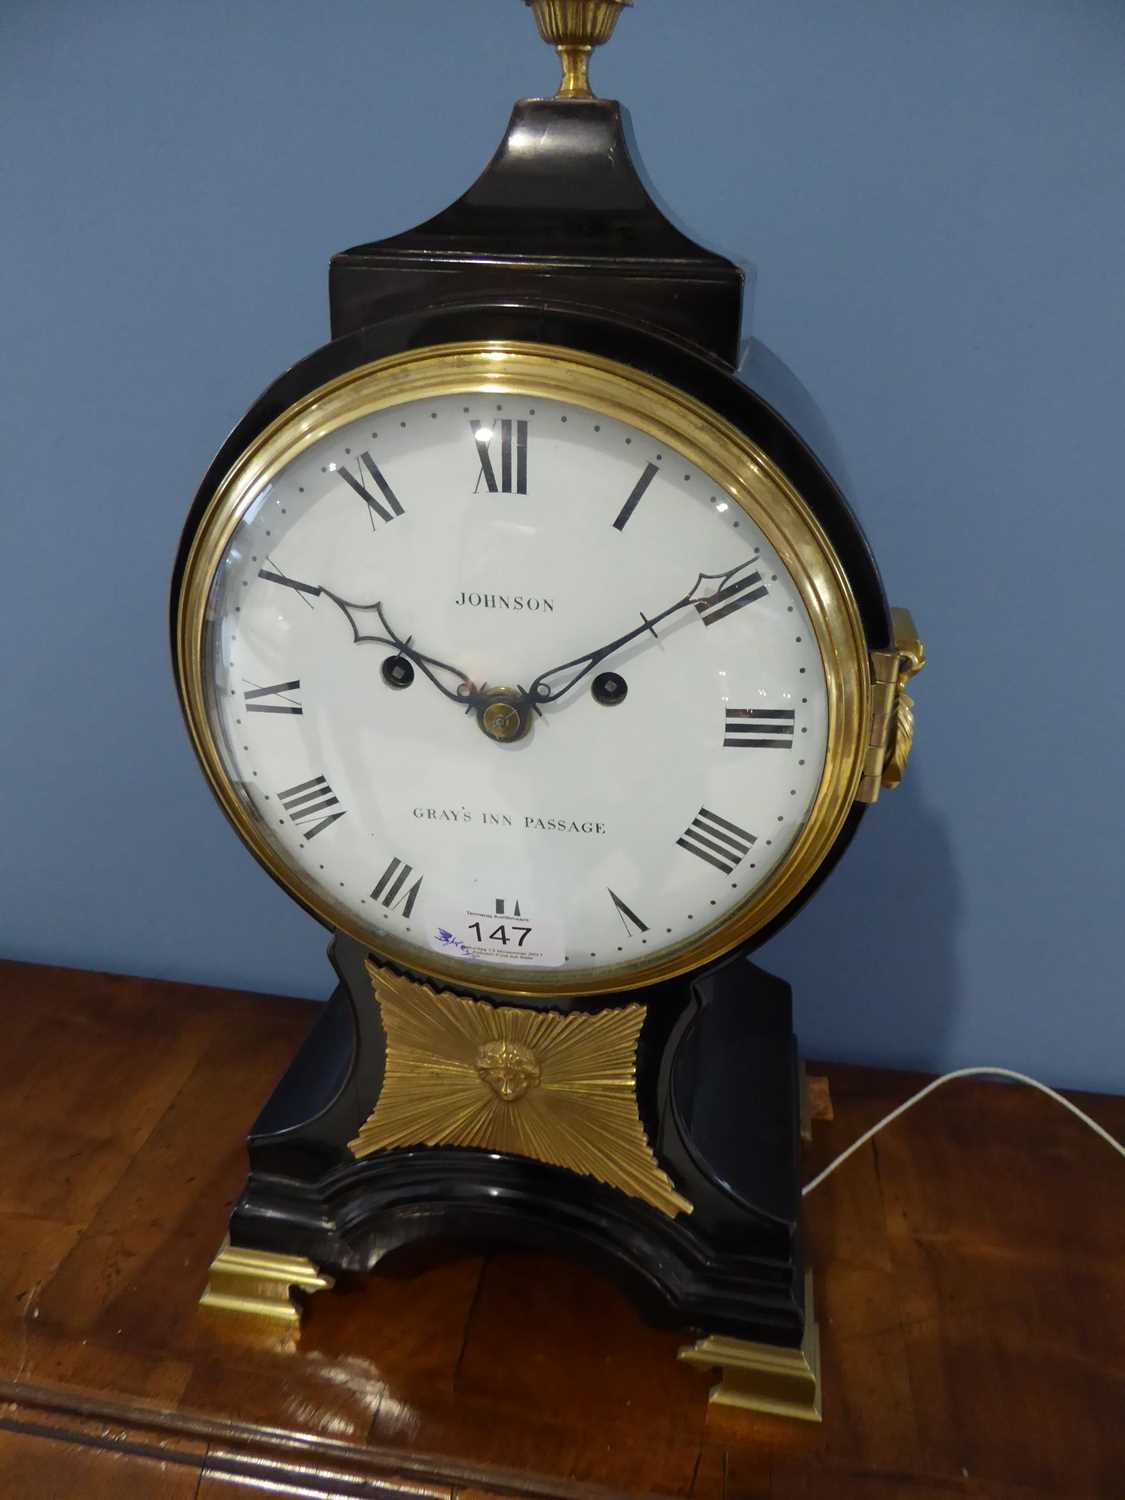 A Balloon Shaped Striking Table Clock, signed Johnson, Gray's Inn Passage, circa 1800, ebonised case - Image 10 of 10